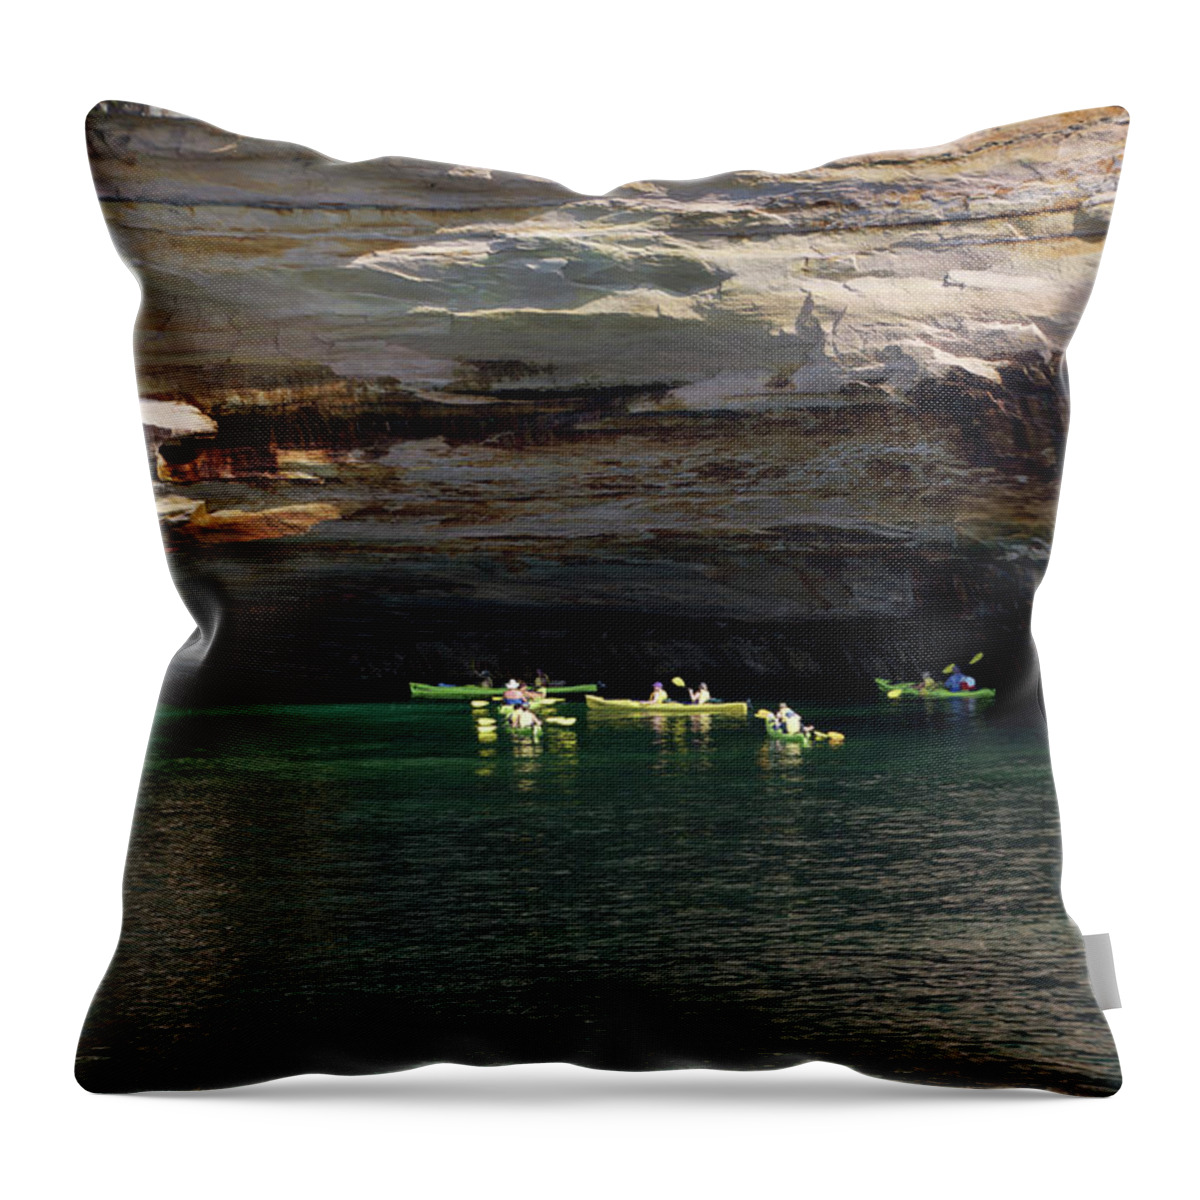 Kayaking Throw Pillow featuring the photograph Kayaking Pictured Rocks National Lakeshore Upper Peninsula Michigan 23 by Thomas Woolworth